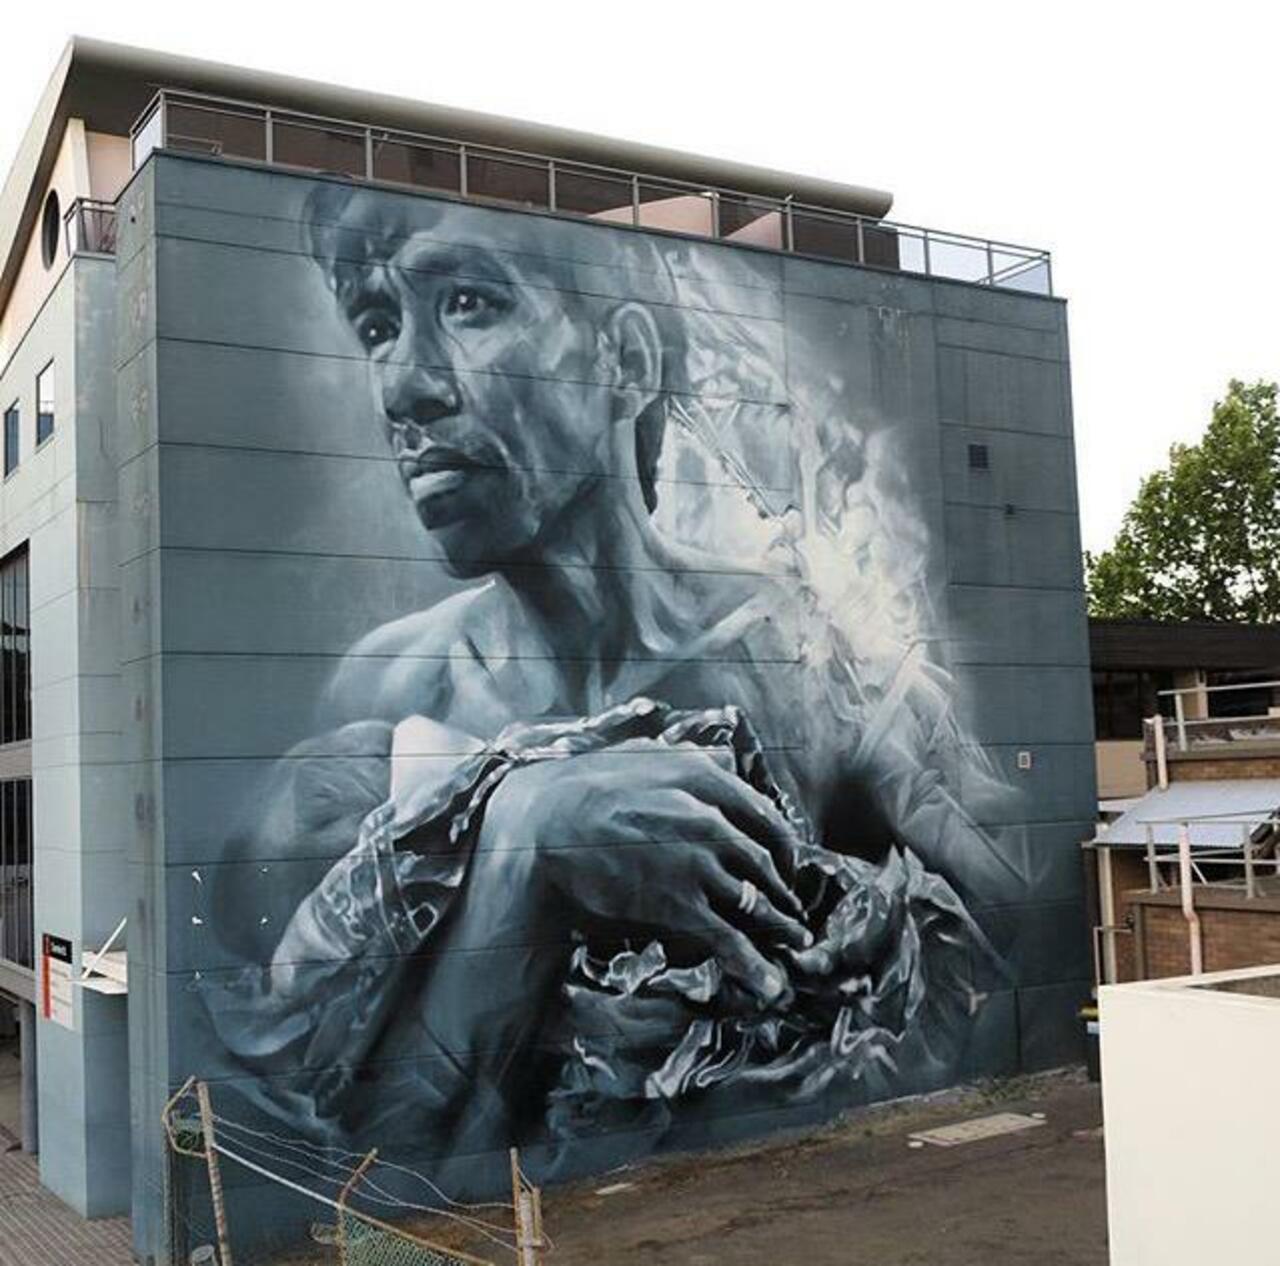 New Street Art by Guido Van Helten in Wollongong Australia 

#art #graffiti #mural #streetart http://t.co/vrGqz6fV9o